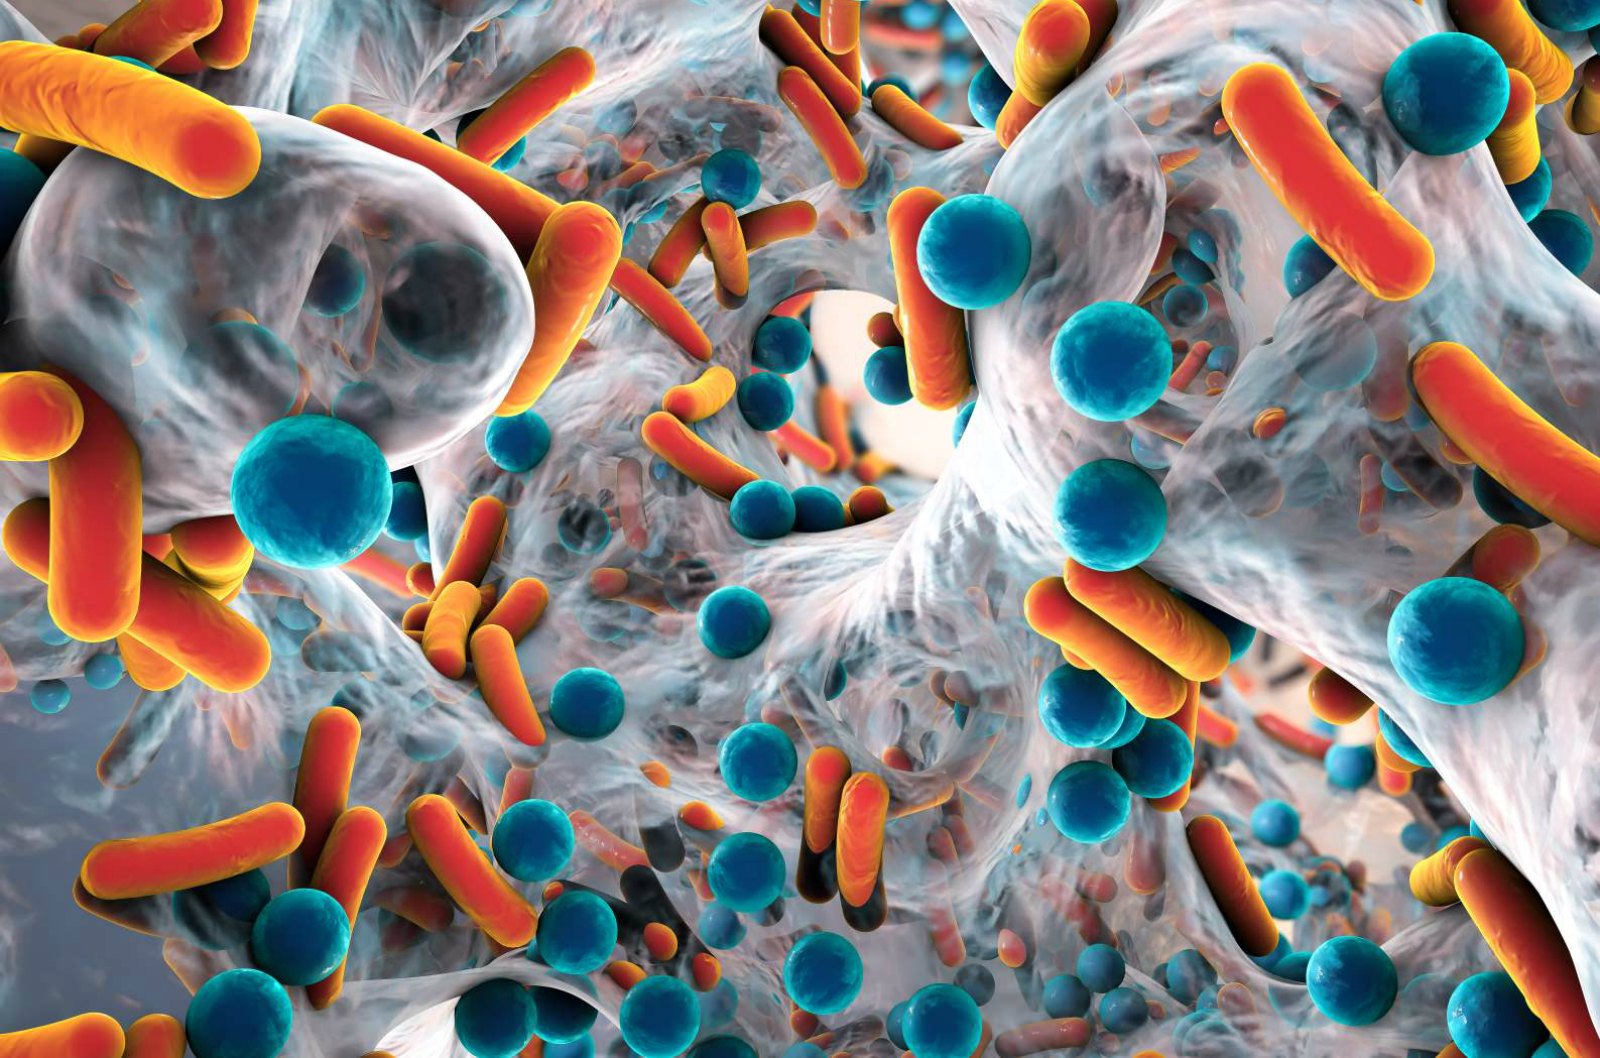 Improved Diagnostic Test Targets Hard-to-Detect Bacteria